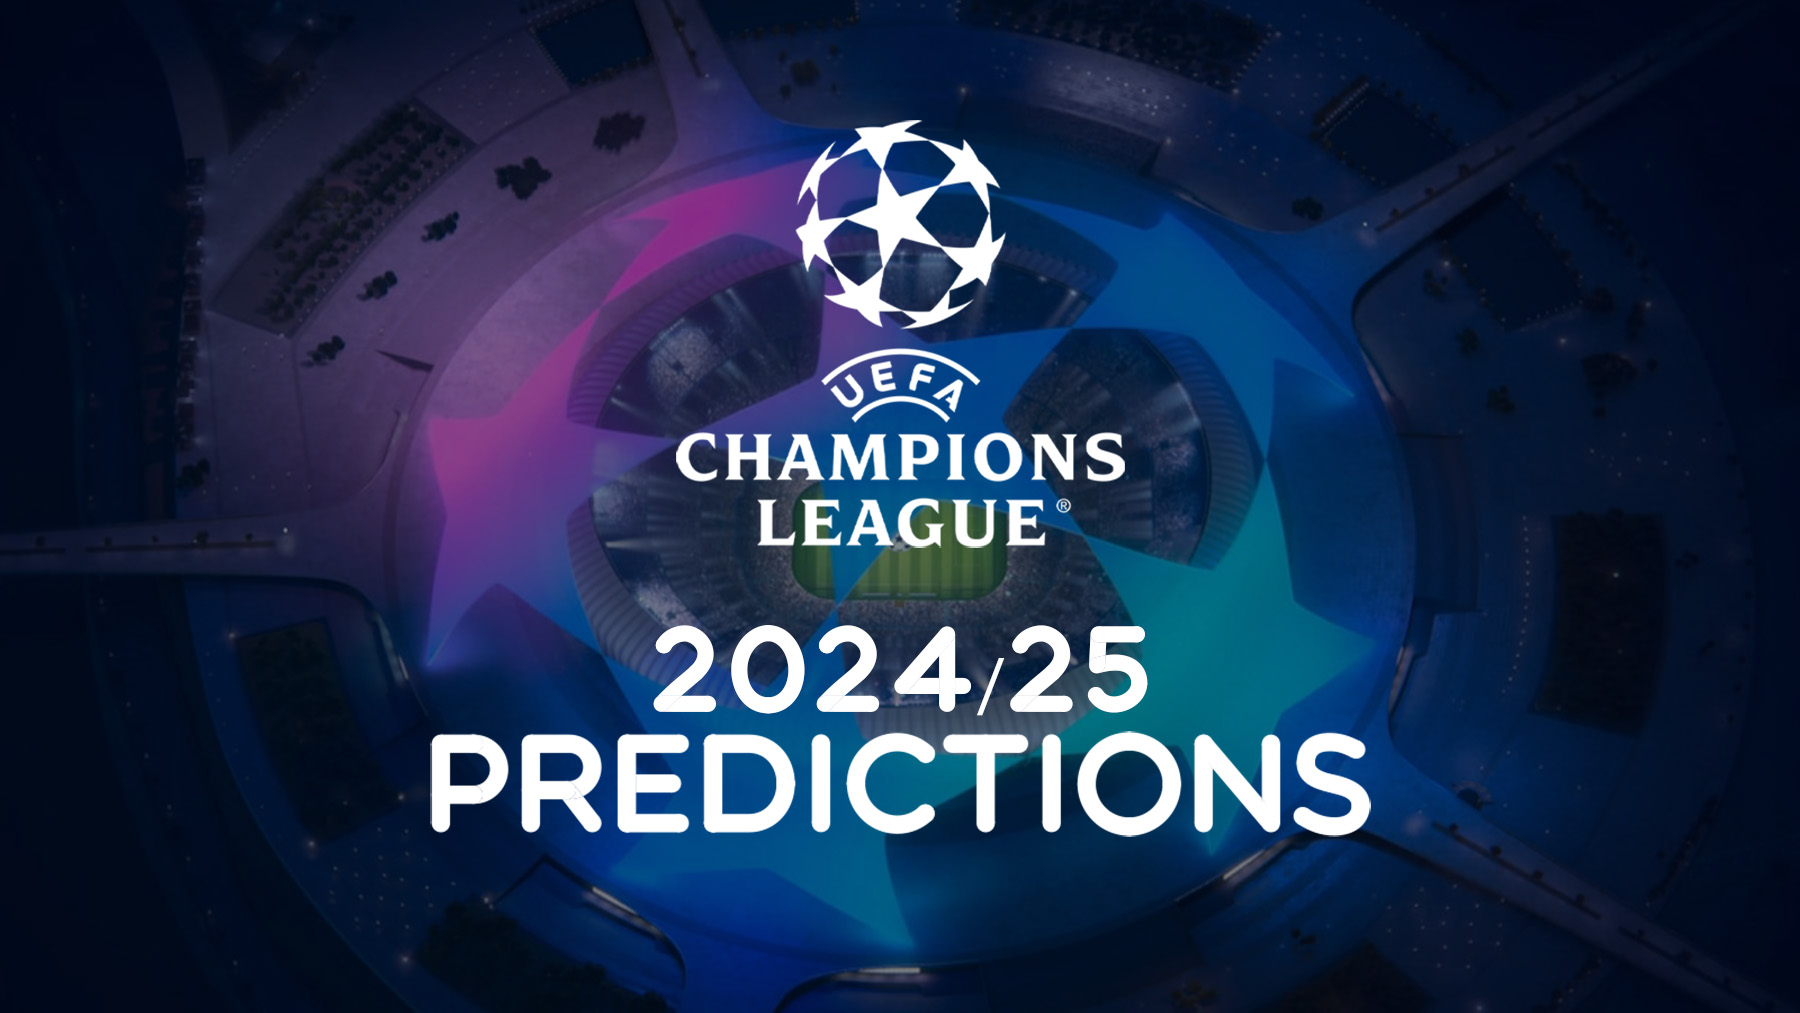 Champions League 2024/25 Predictions